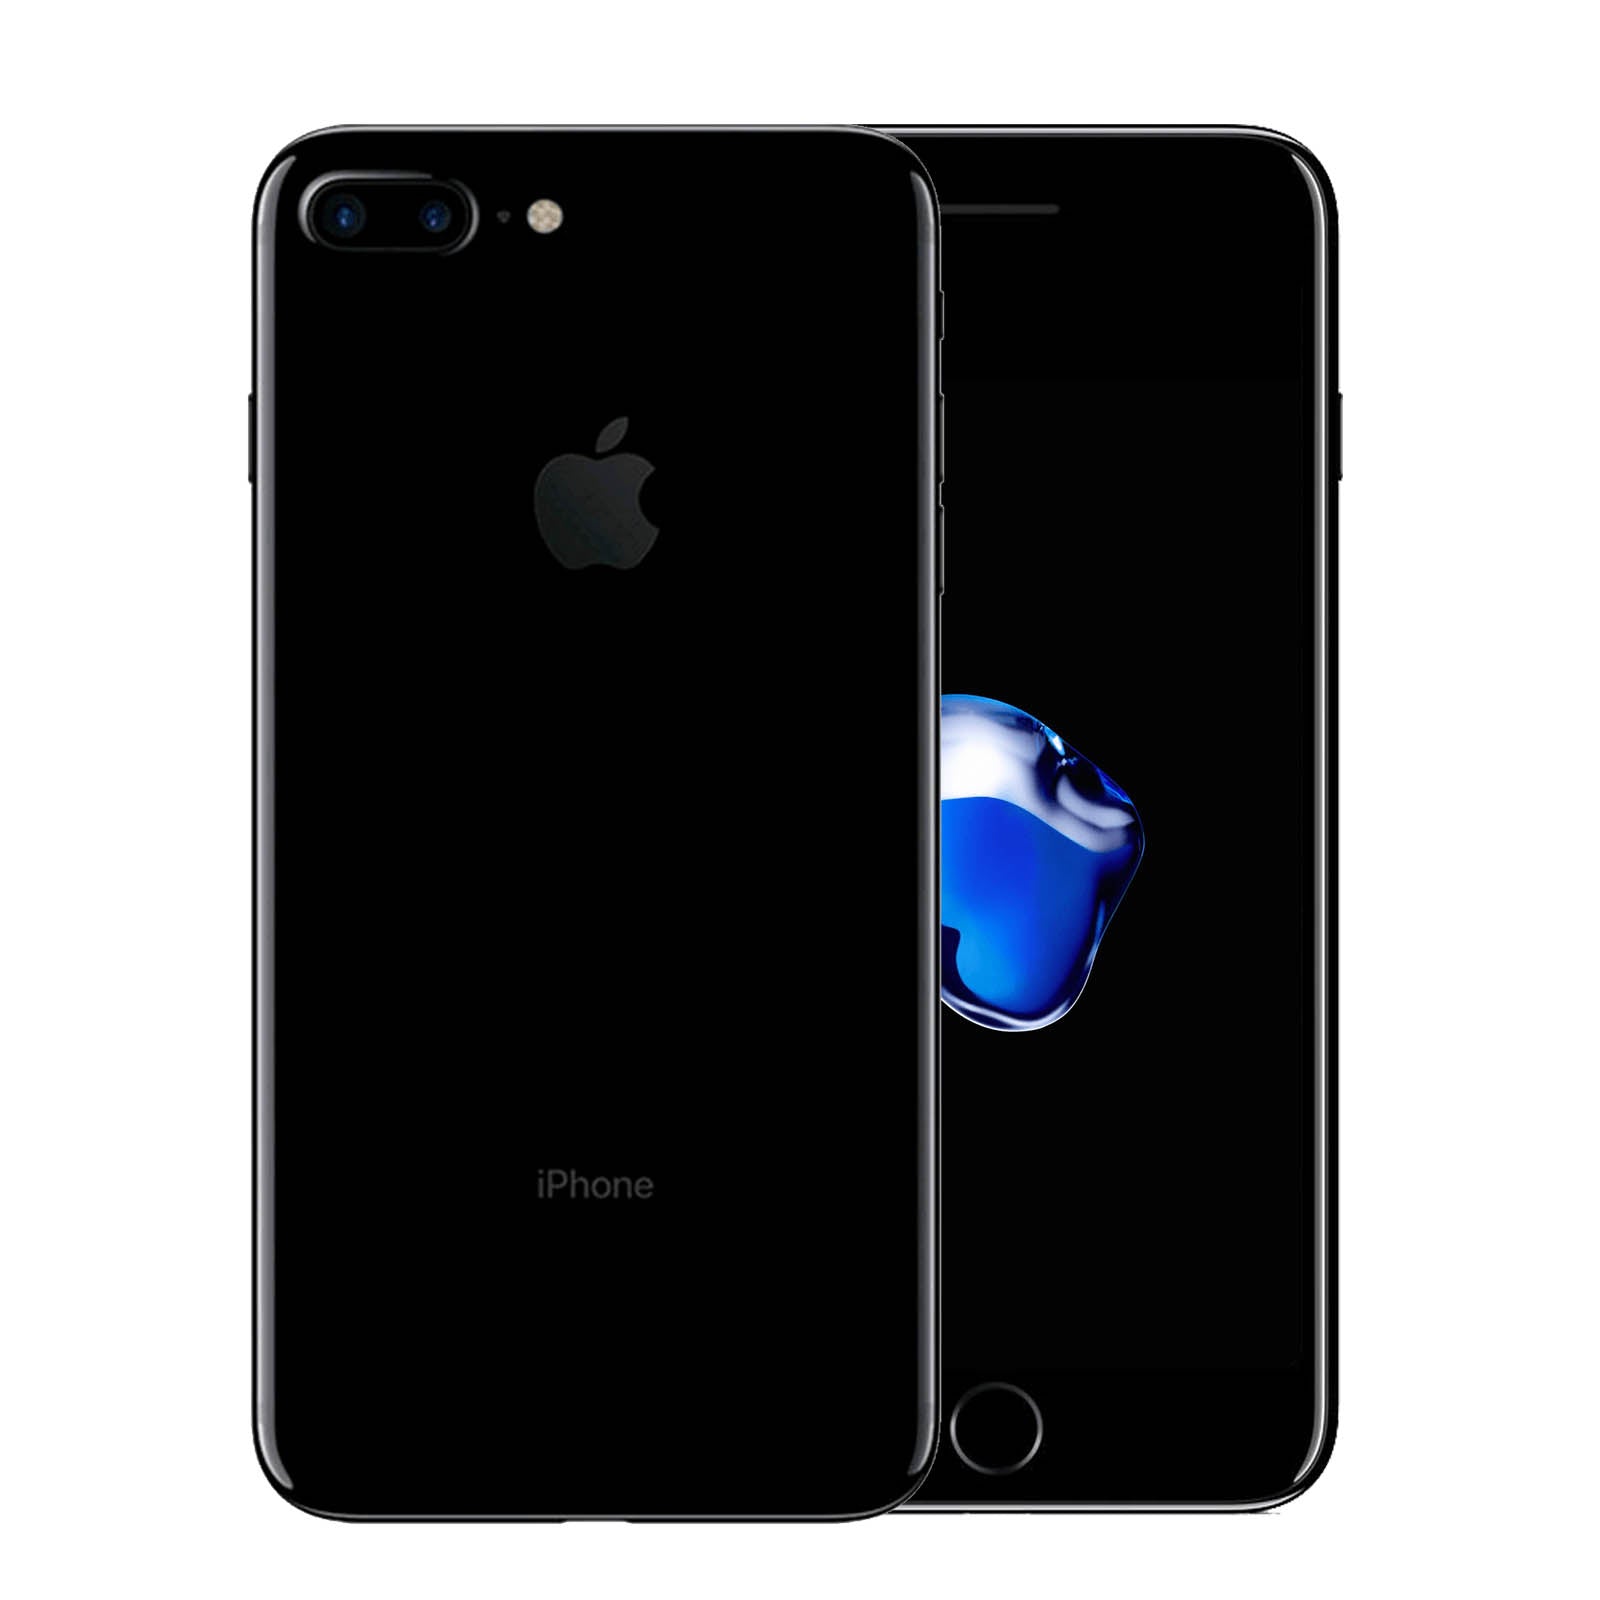 Apple iPhone 7 Plus 256GB Jet Black Very Good - Unlocked